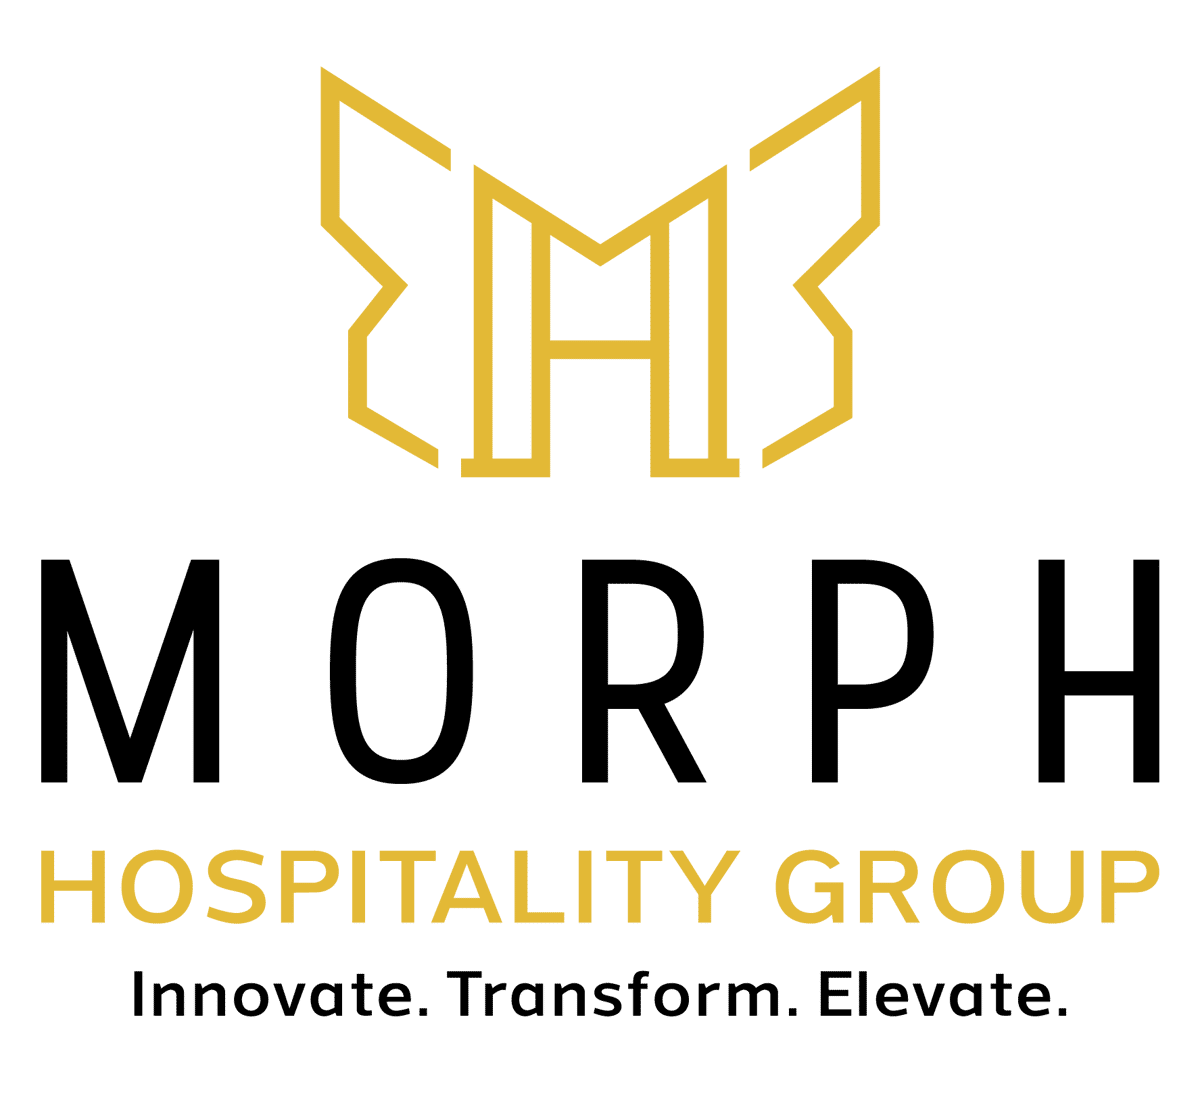 morph logo